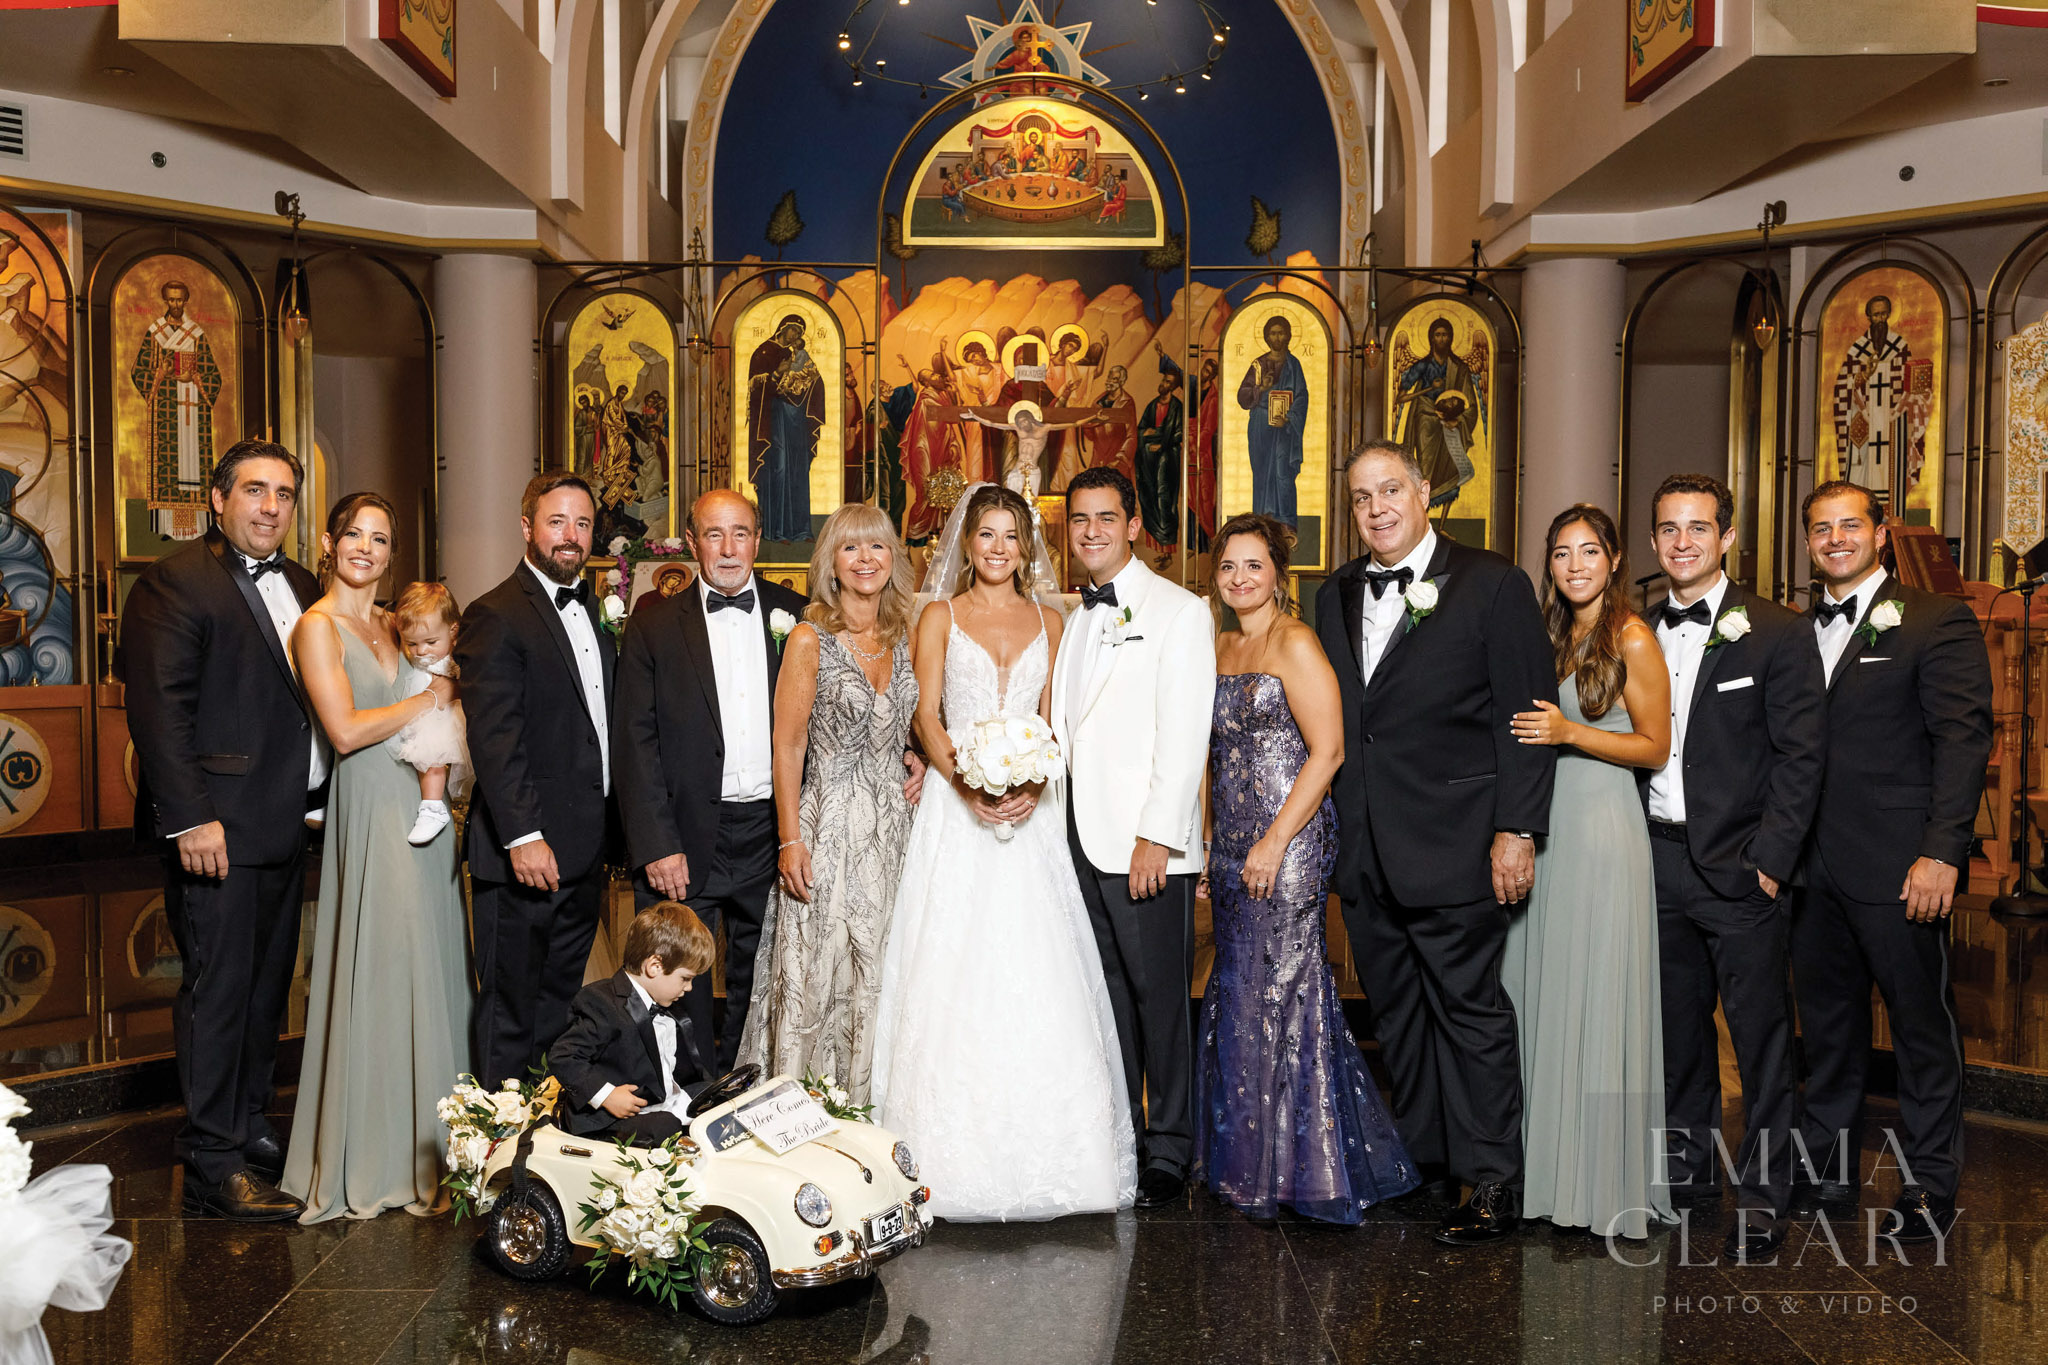 Group wedding portrait